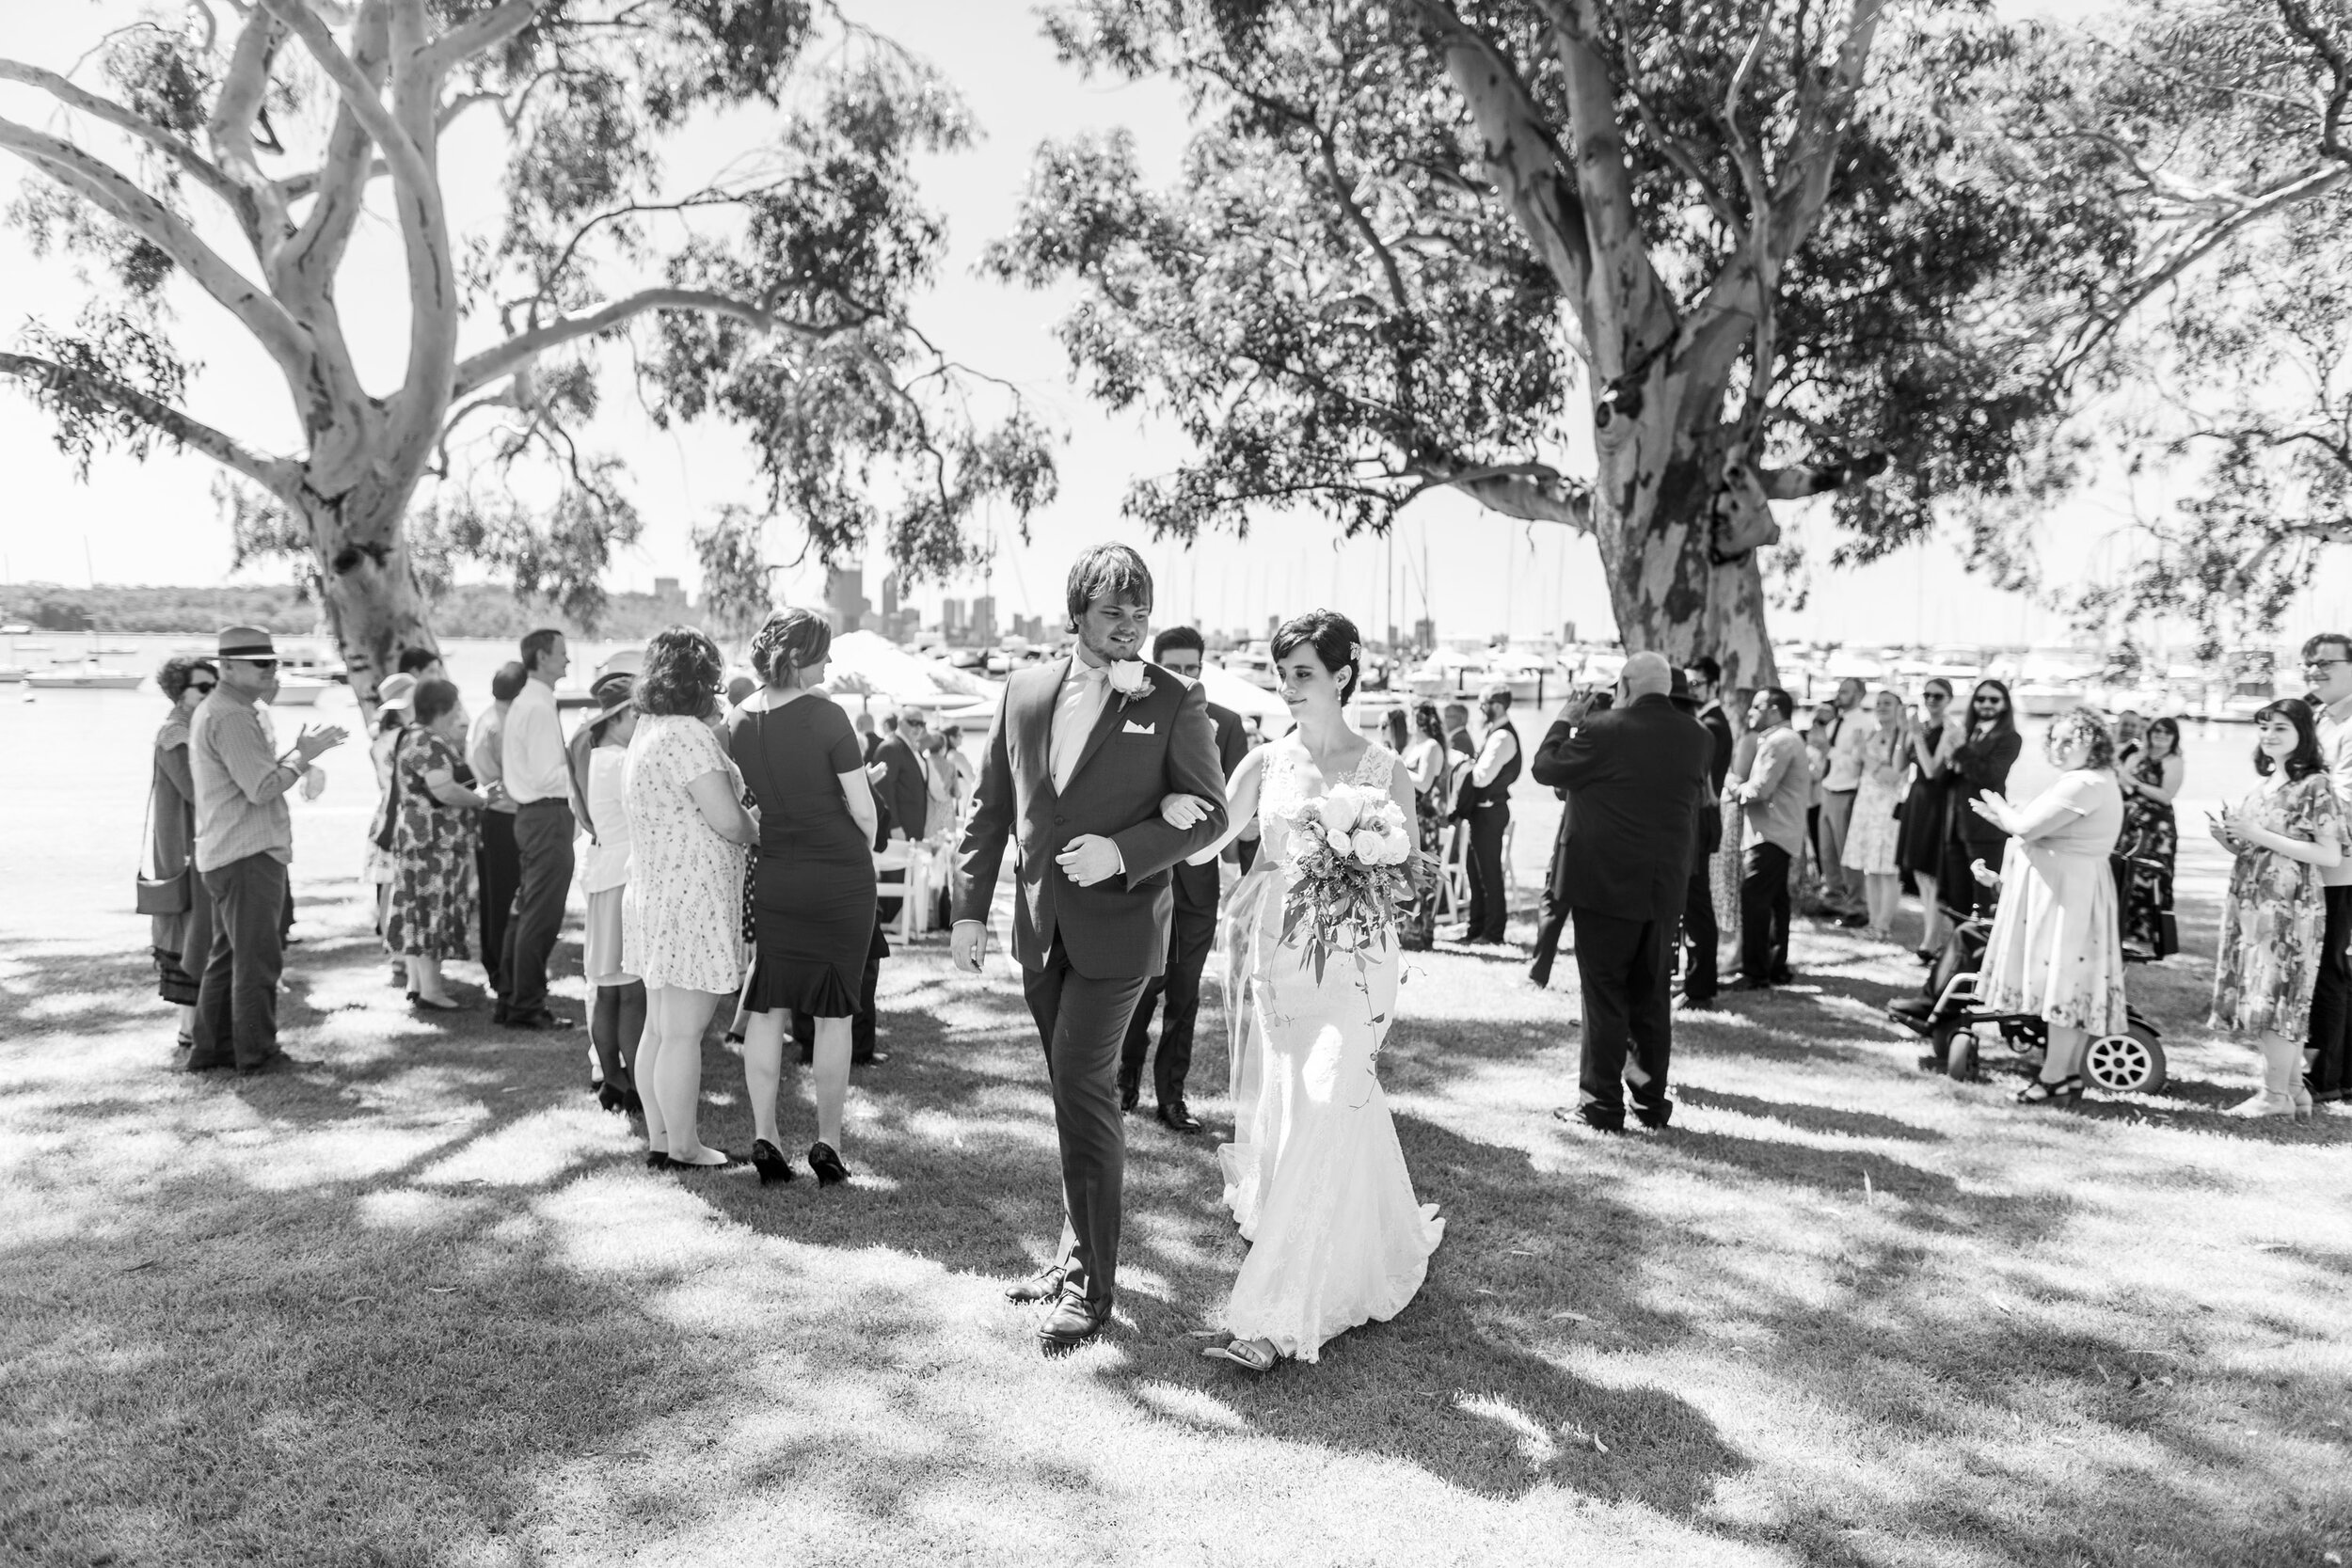 Perth Wedding Photographer - J + M - Ceremony - 0419 - DZuks - 340.jpg